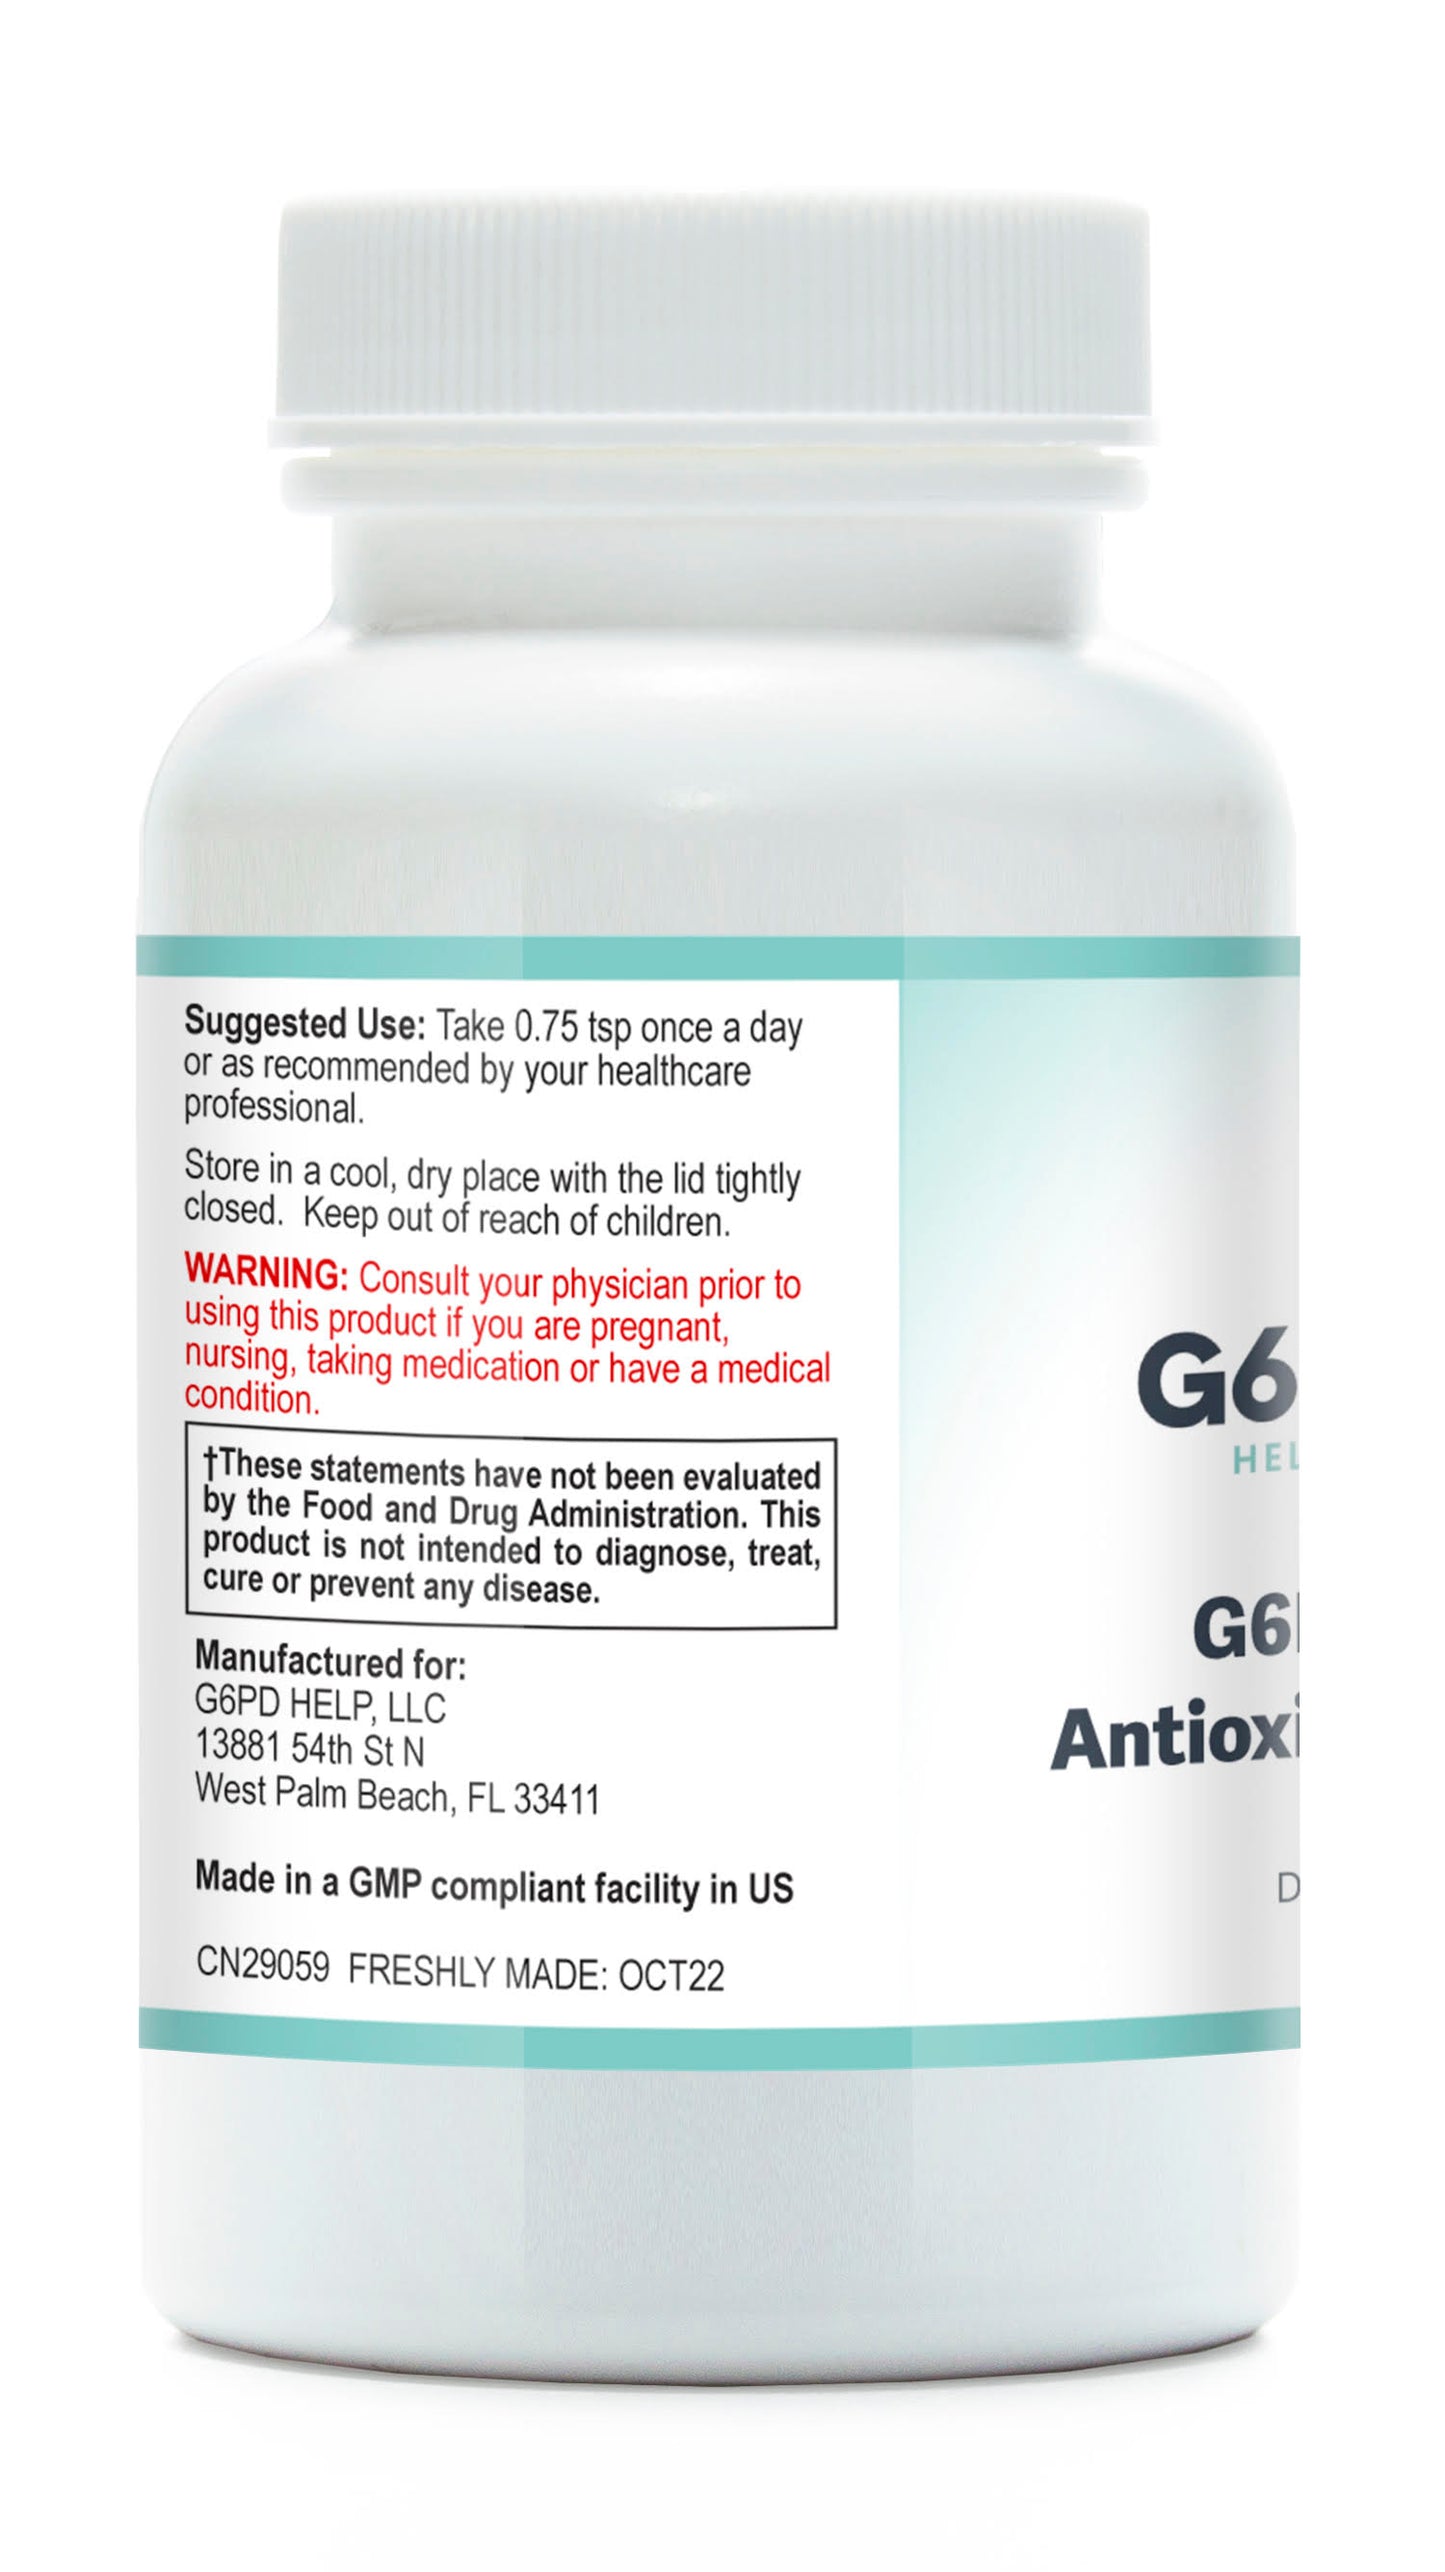 G6PD Antioxidants - Limited Quantity!!